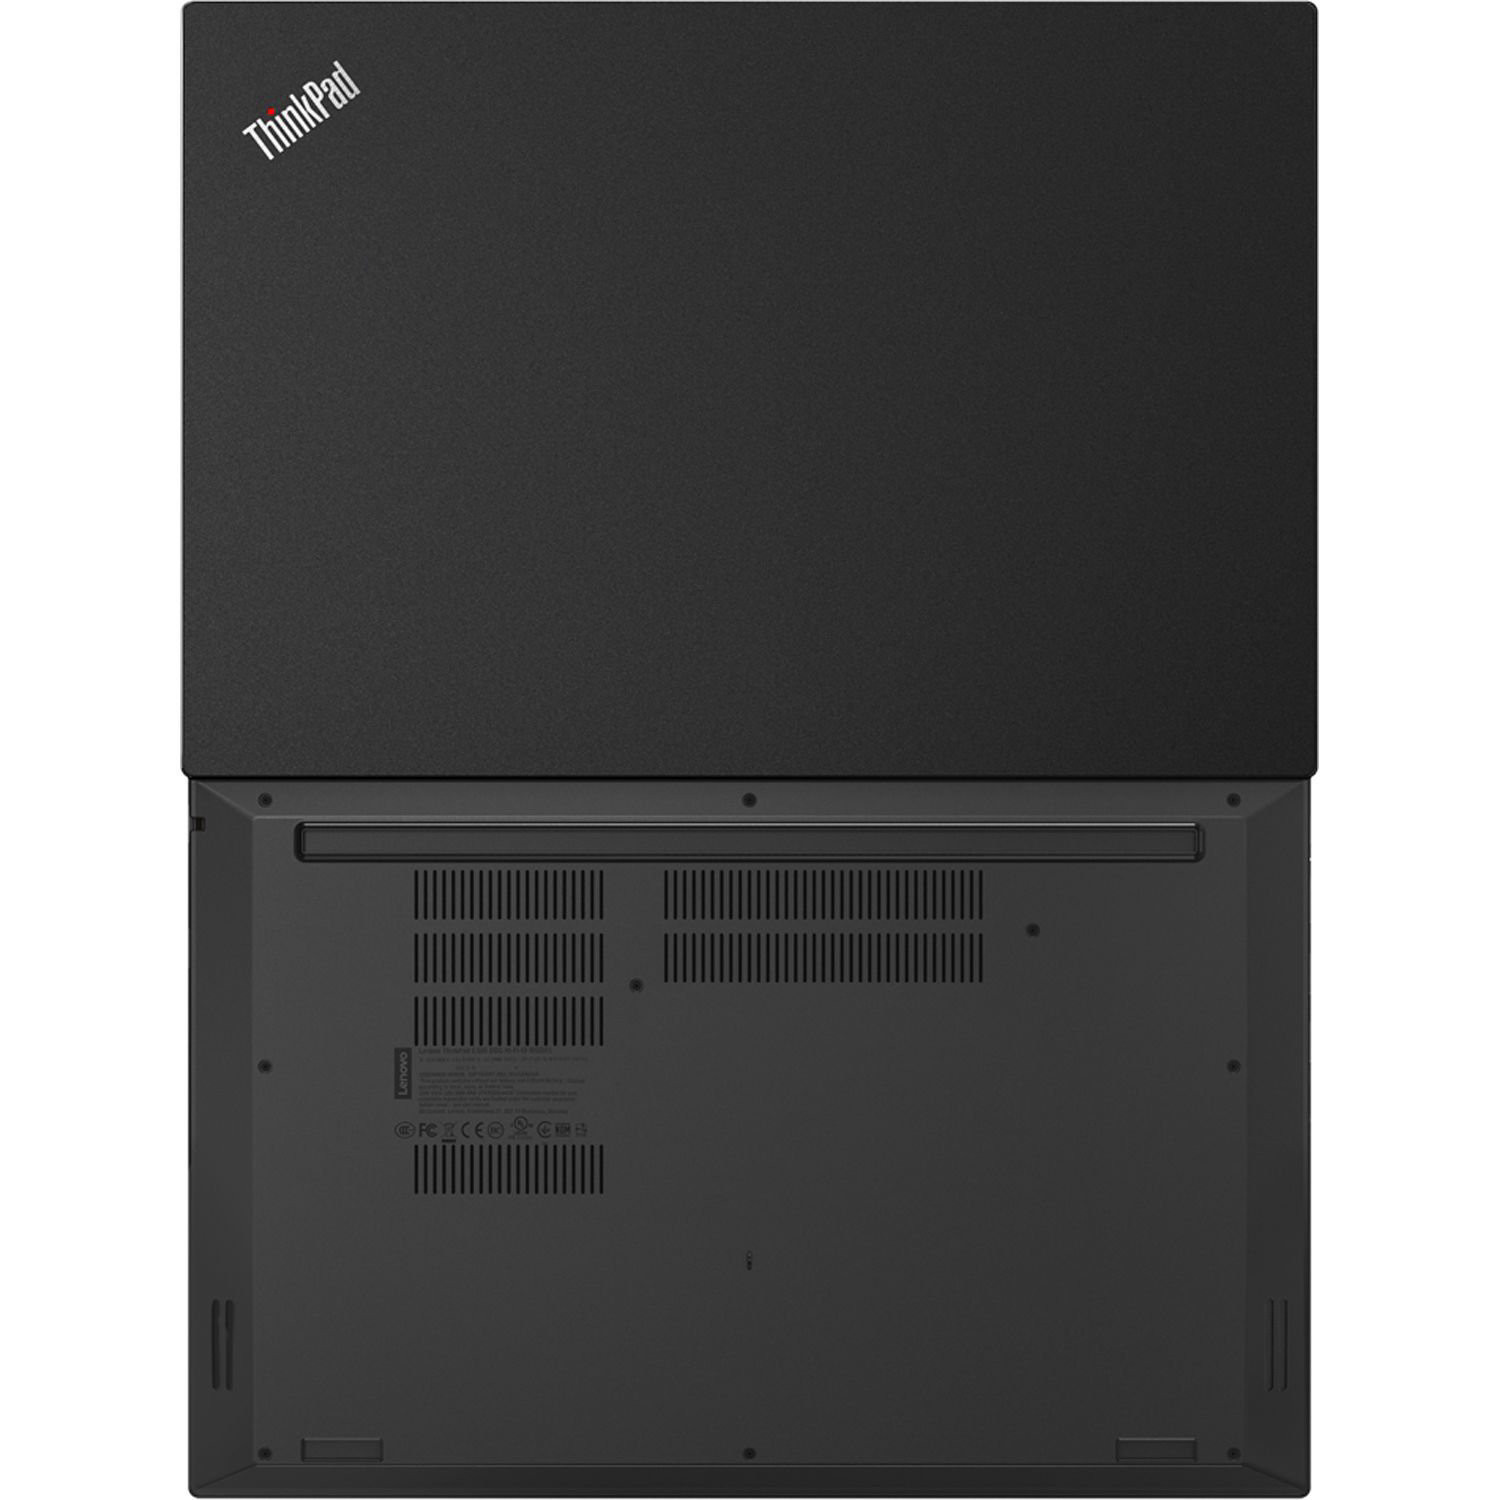 2019 Lenovo ThinkPad E580 15.6" Inch HD Business Laptop (Intel Core i5-7200U, 8GB DDR4 Memory, 256GB Samsung PCIe 3.0(x4) NVMe SSD M.2 SSD) Fingerprint, Type-C, HDMI, Ethernet, Webcam, Windows 10 Pro